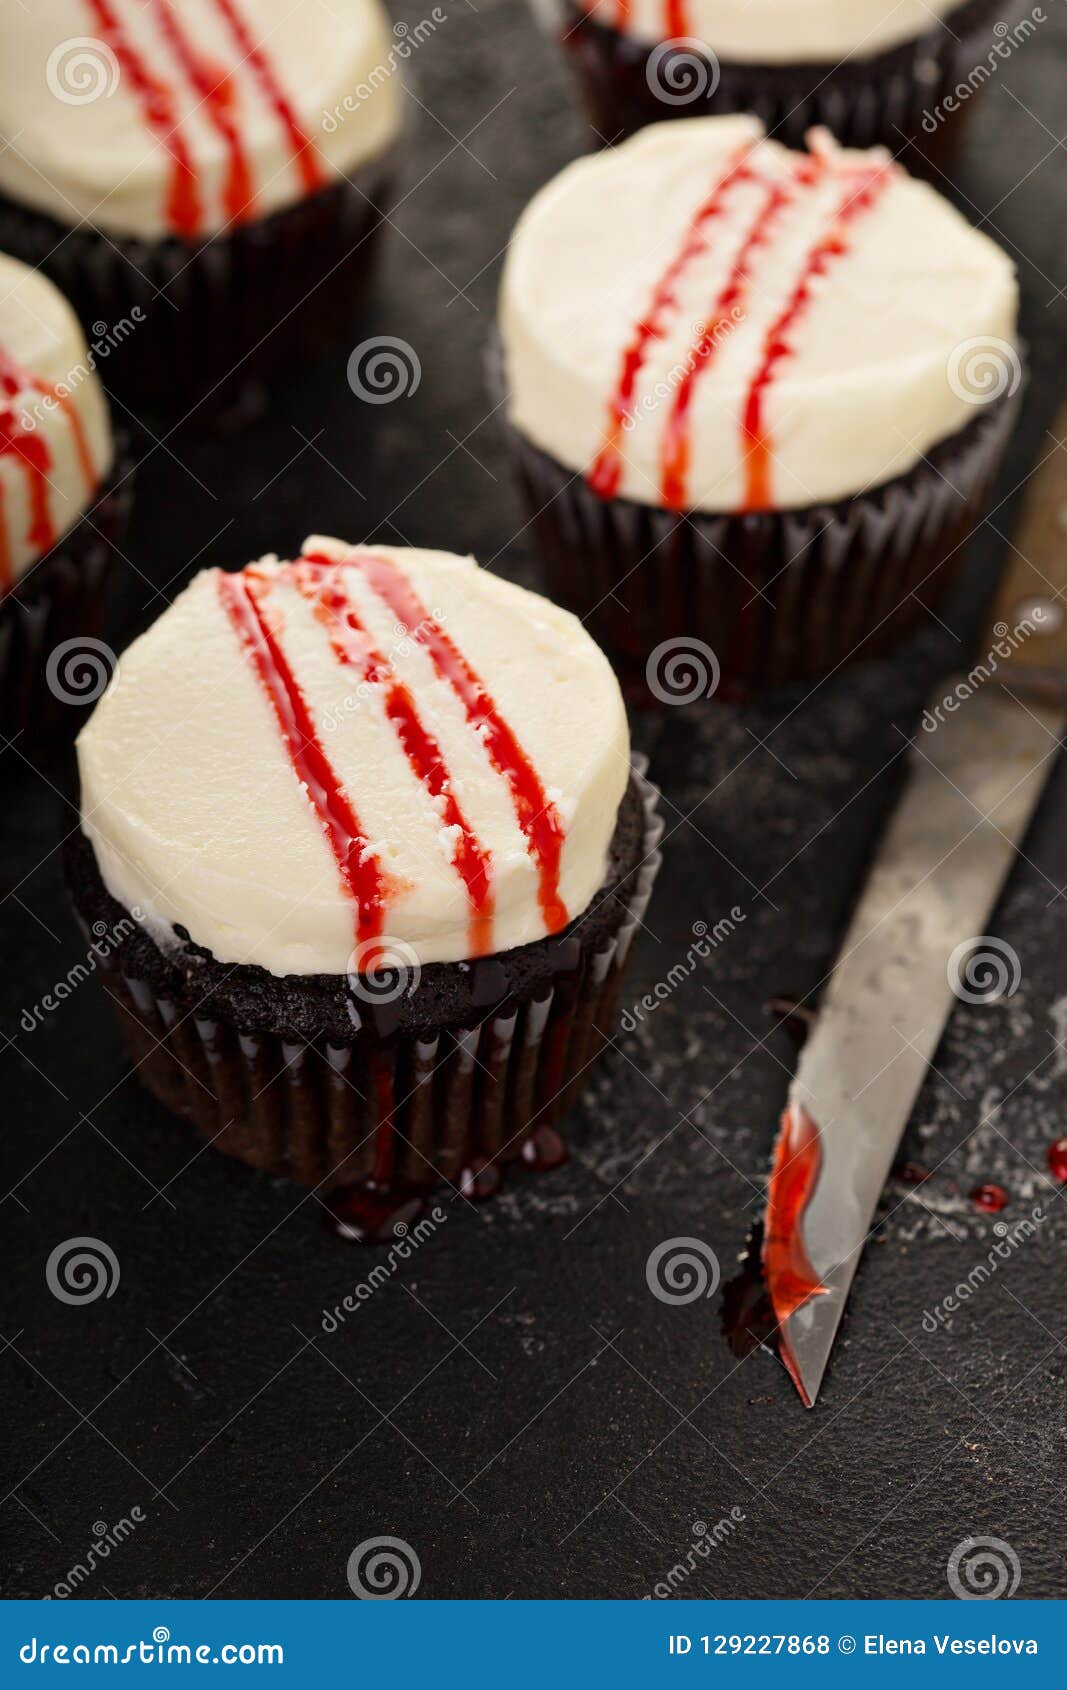 Halloween Creepy Cupcakes with Raspberry Syrup Stock Photo - Image of ...